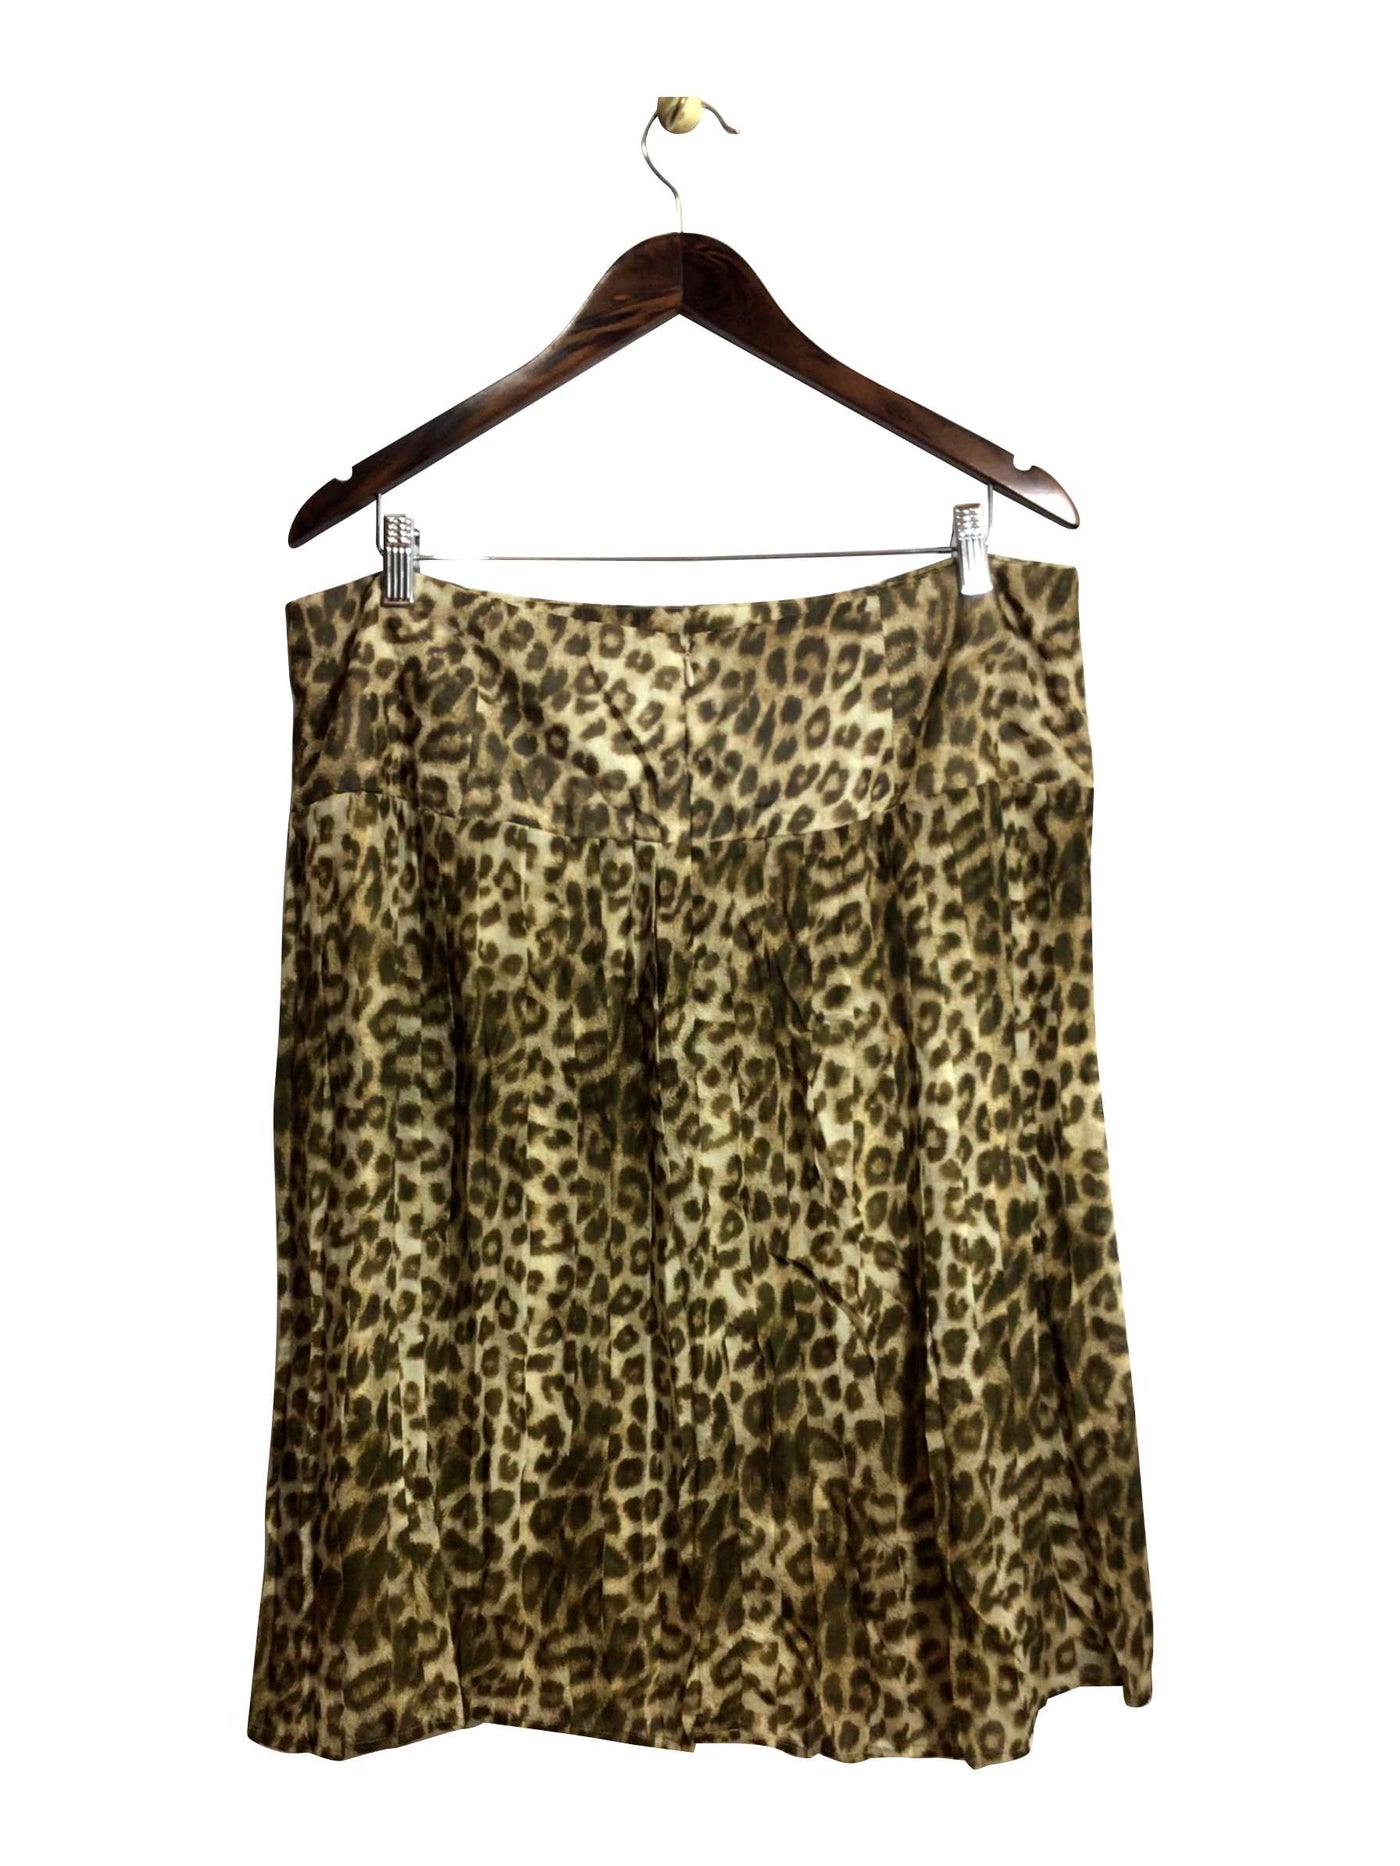 TRADITION Regular fit Skirt in Brown - Size 14 | 15 $ KOOP